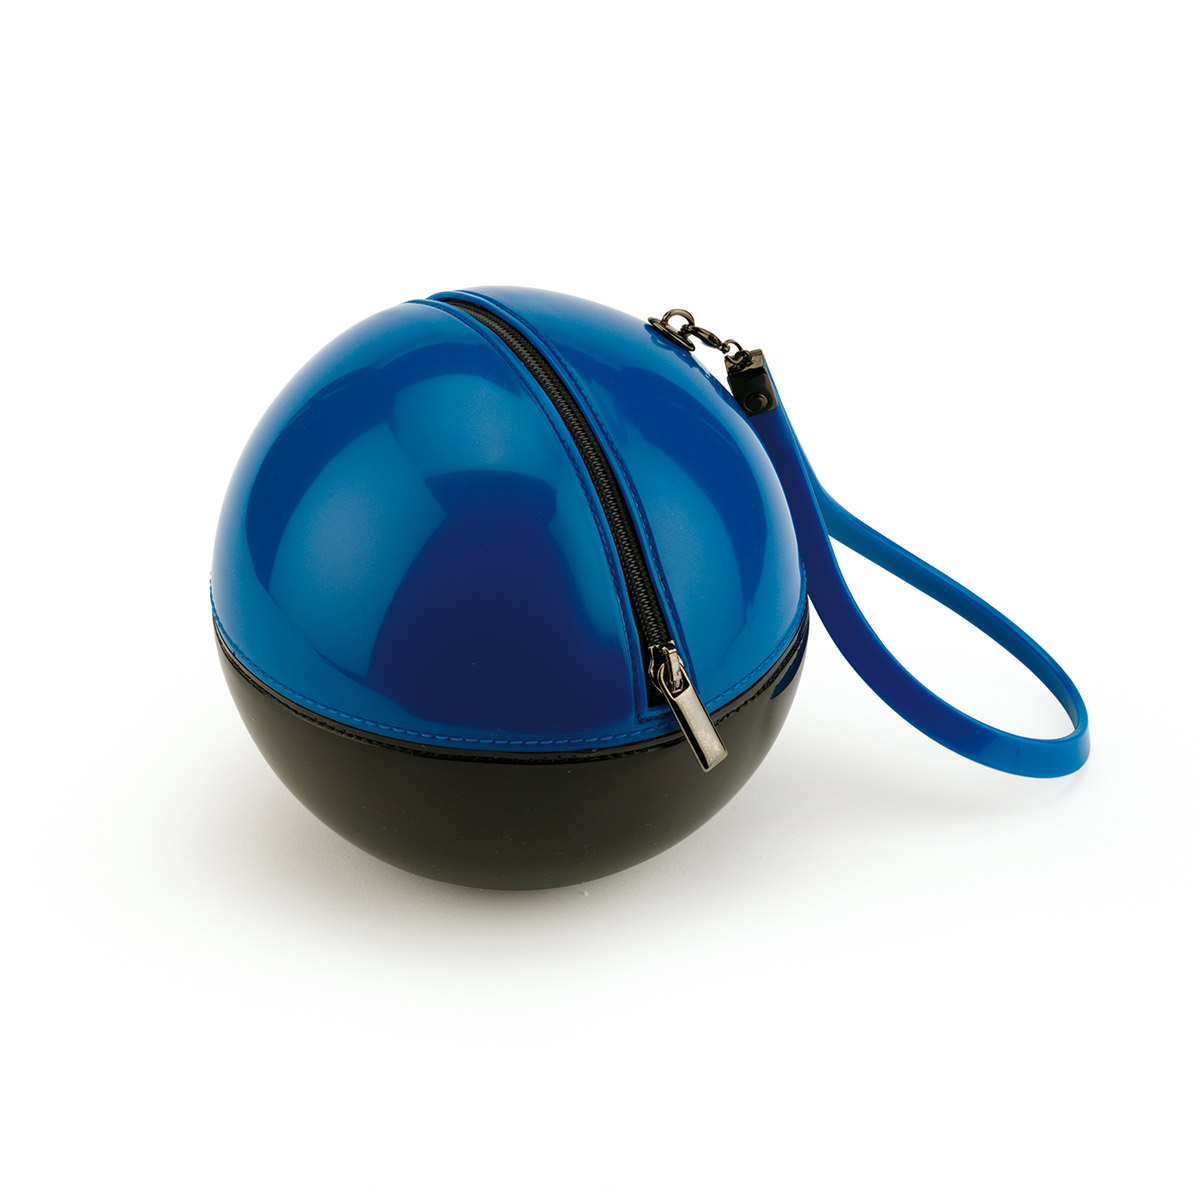 Two-colour pvc Sphere Bag